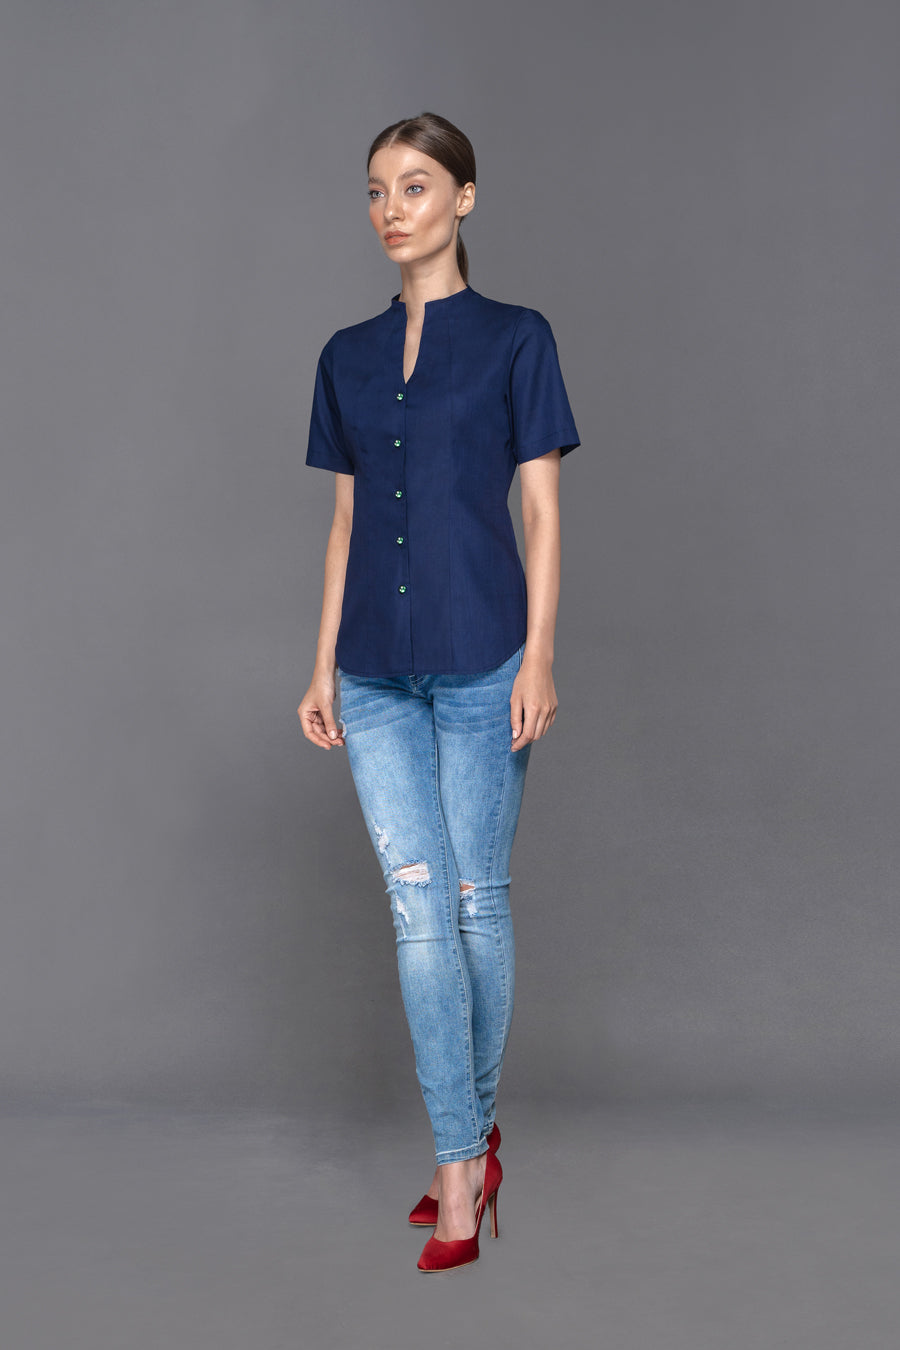 Gabriella - Non Iron - Navy Blue short sleeve shirt